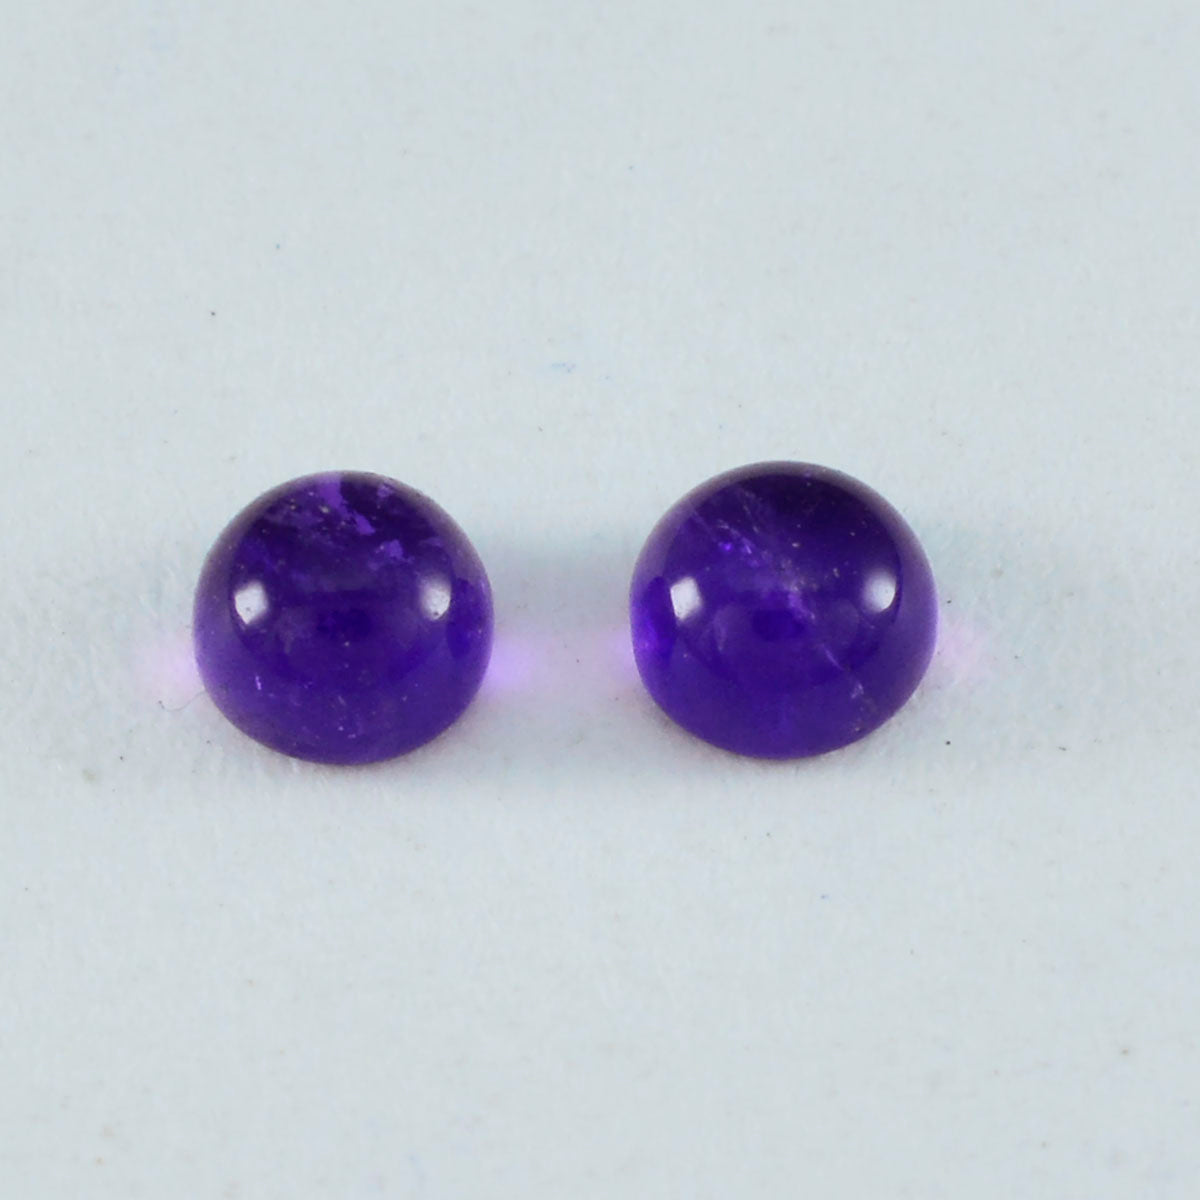 Riyogems 1PC Purple Amethyst Cabochon 5x5 mm Round Shape awesome Quality Loose Gems